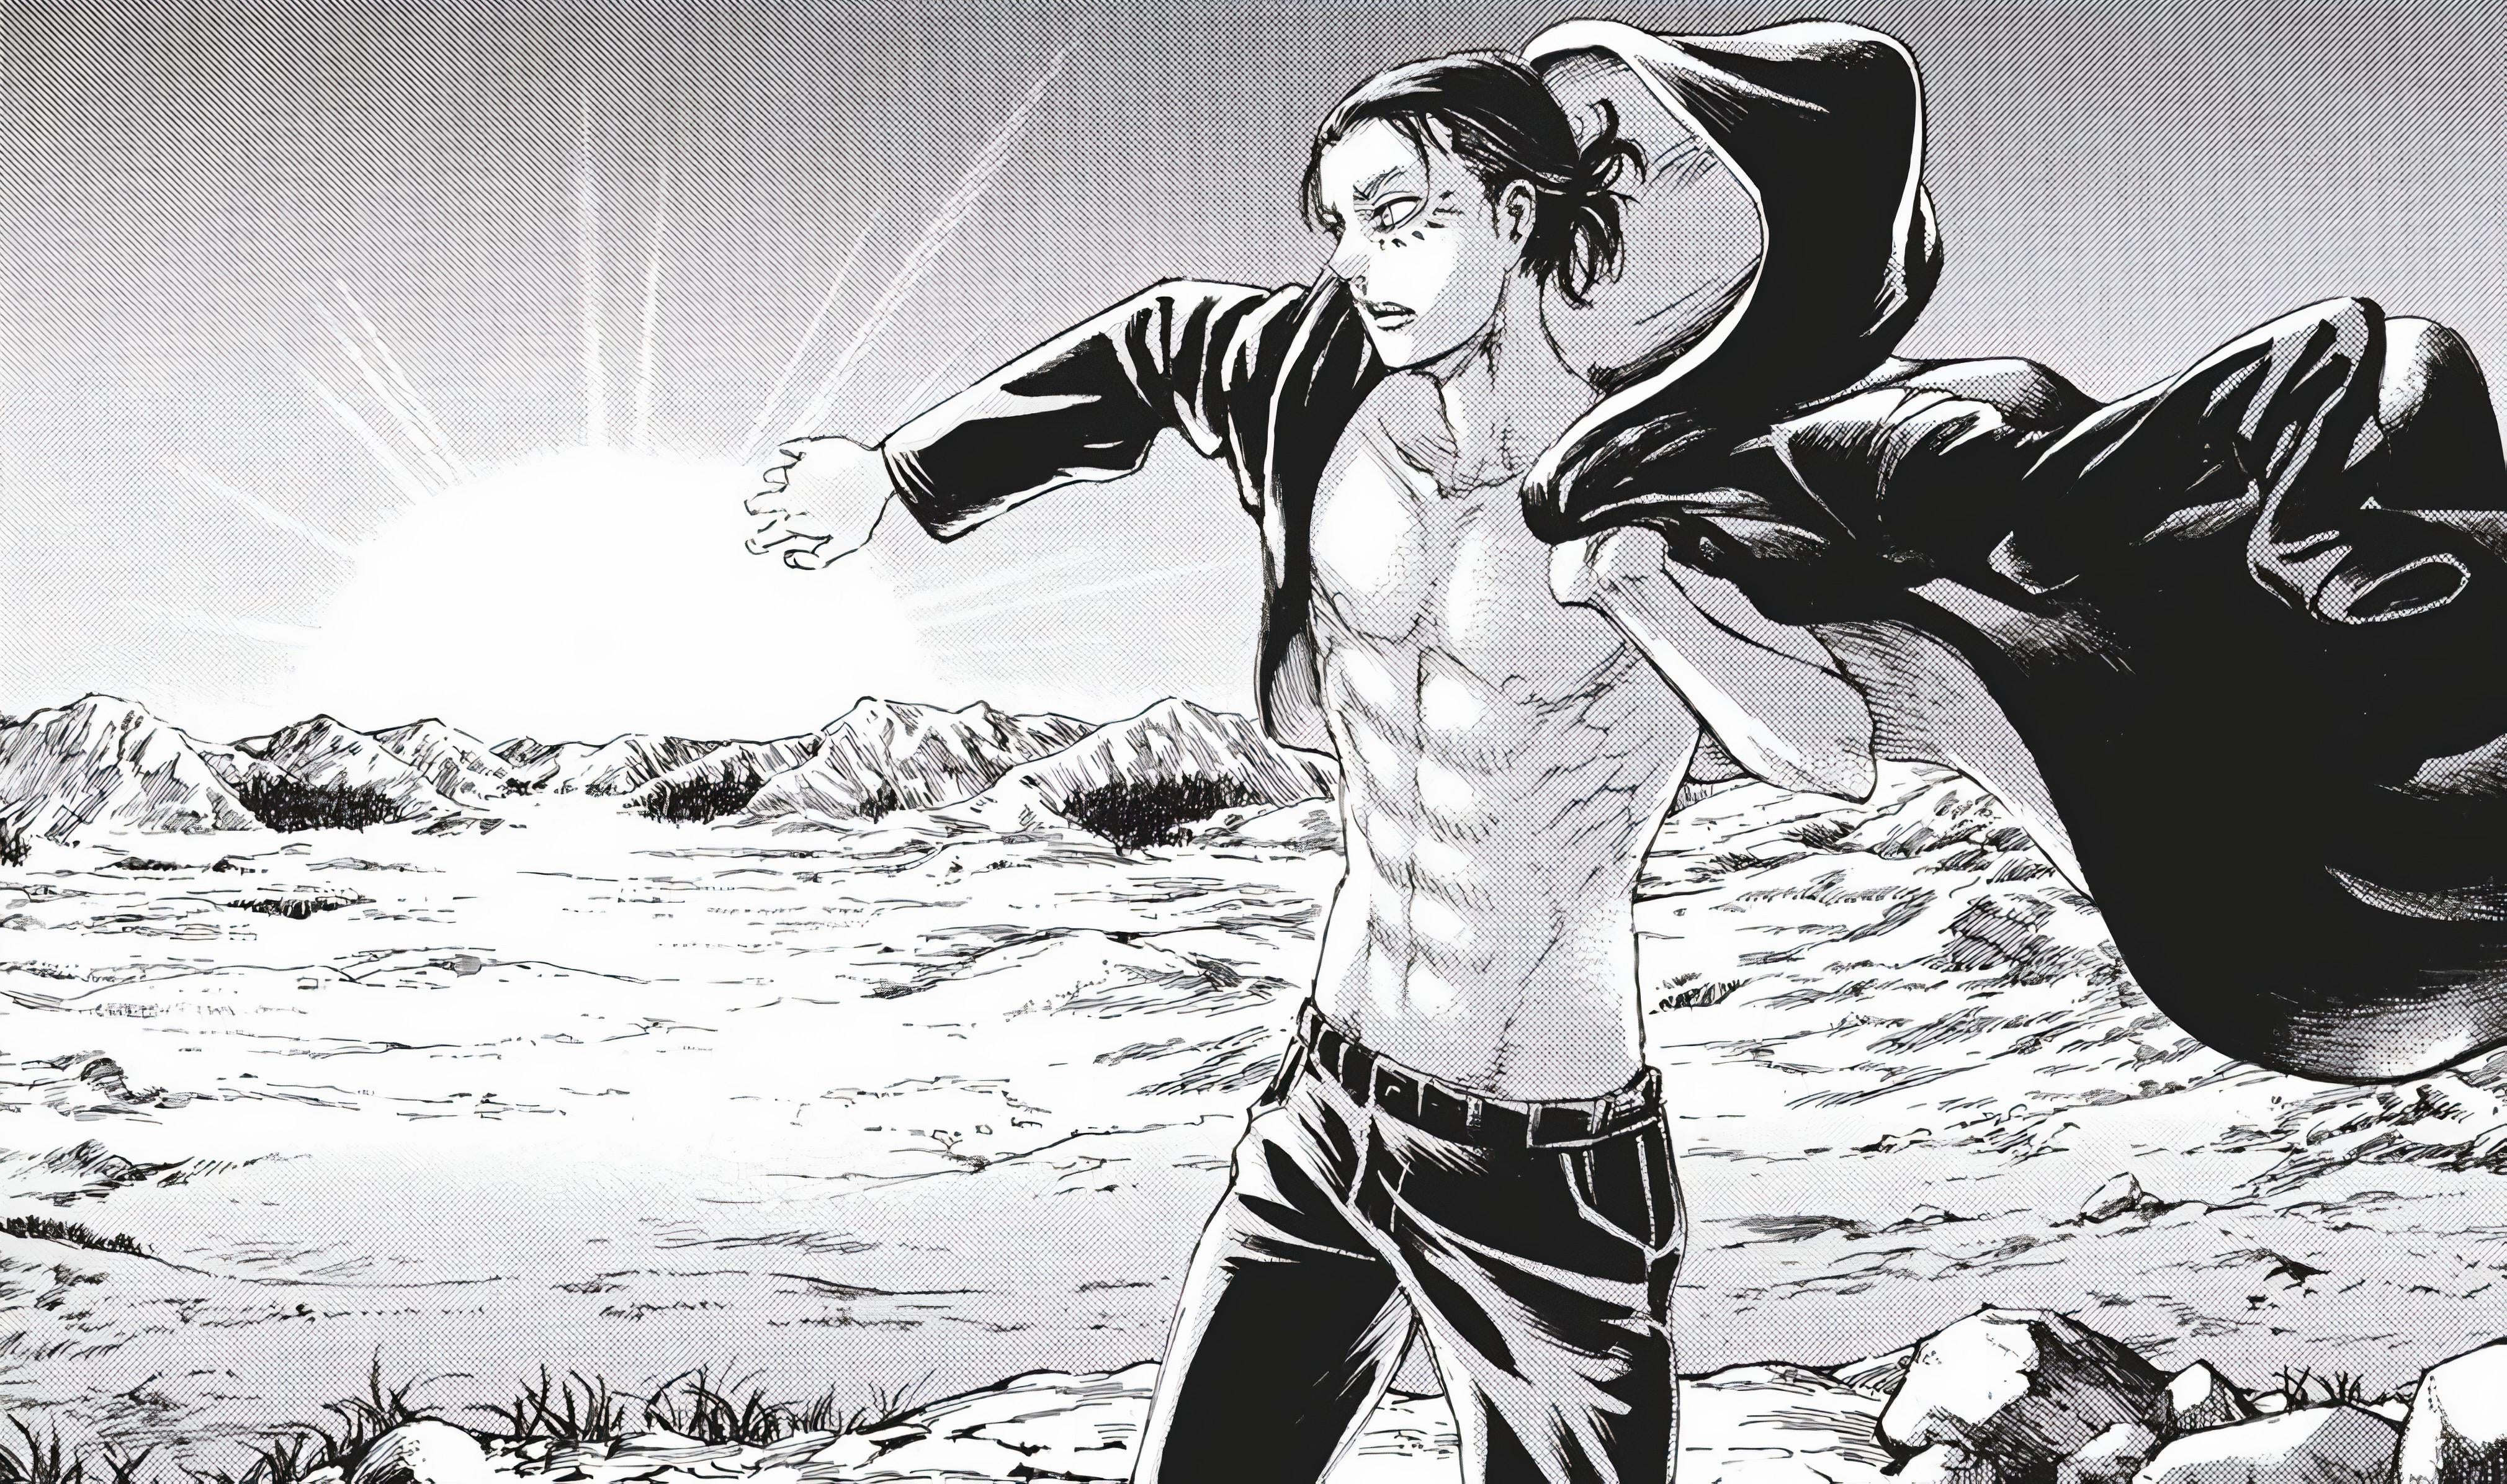 Attack On Titan Manga Panels Wallpapers